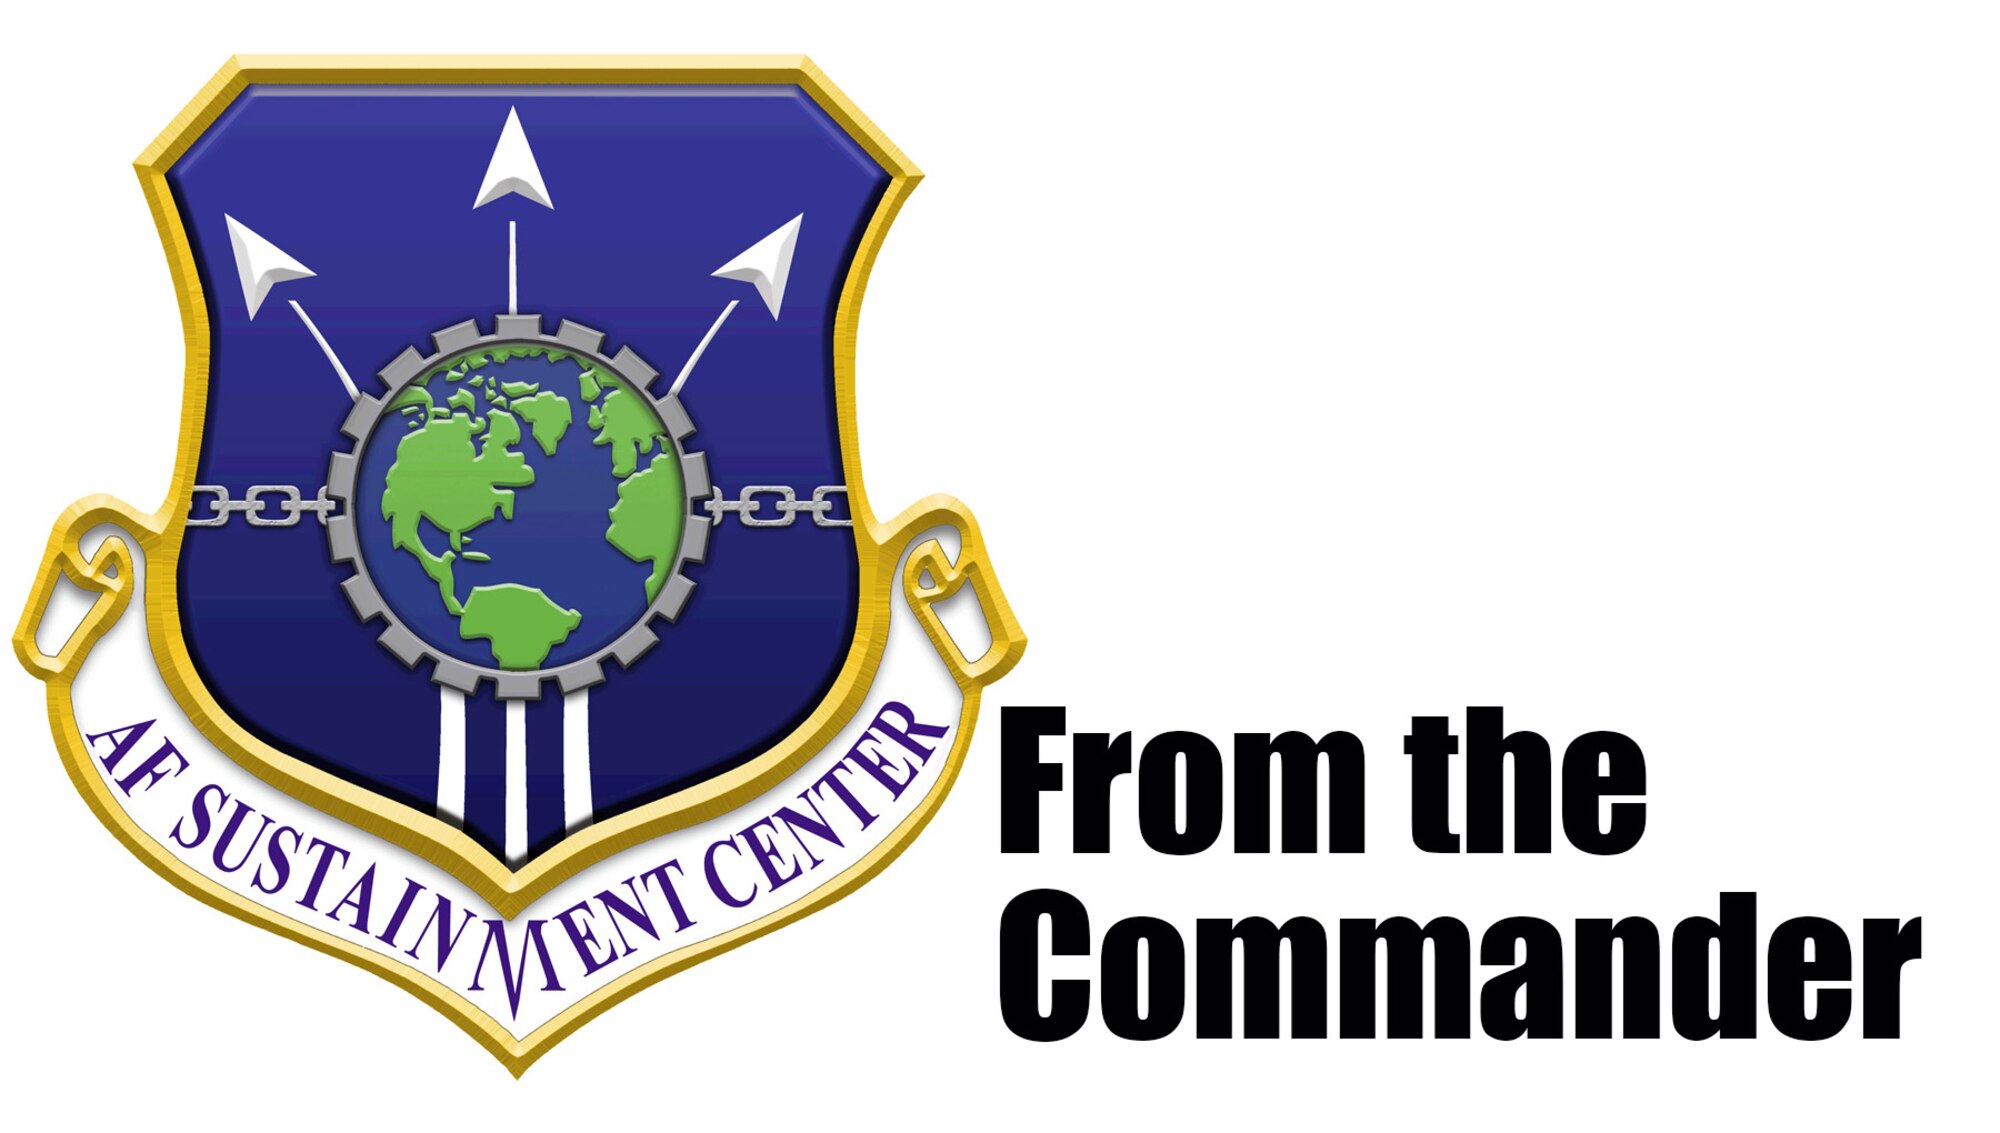 A message from the Air Force Sustainment Center Commander, Lt. Gen. Gene Kirkland.